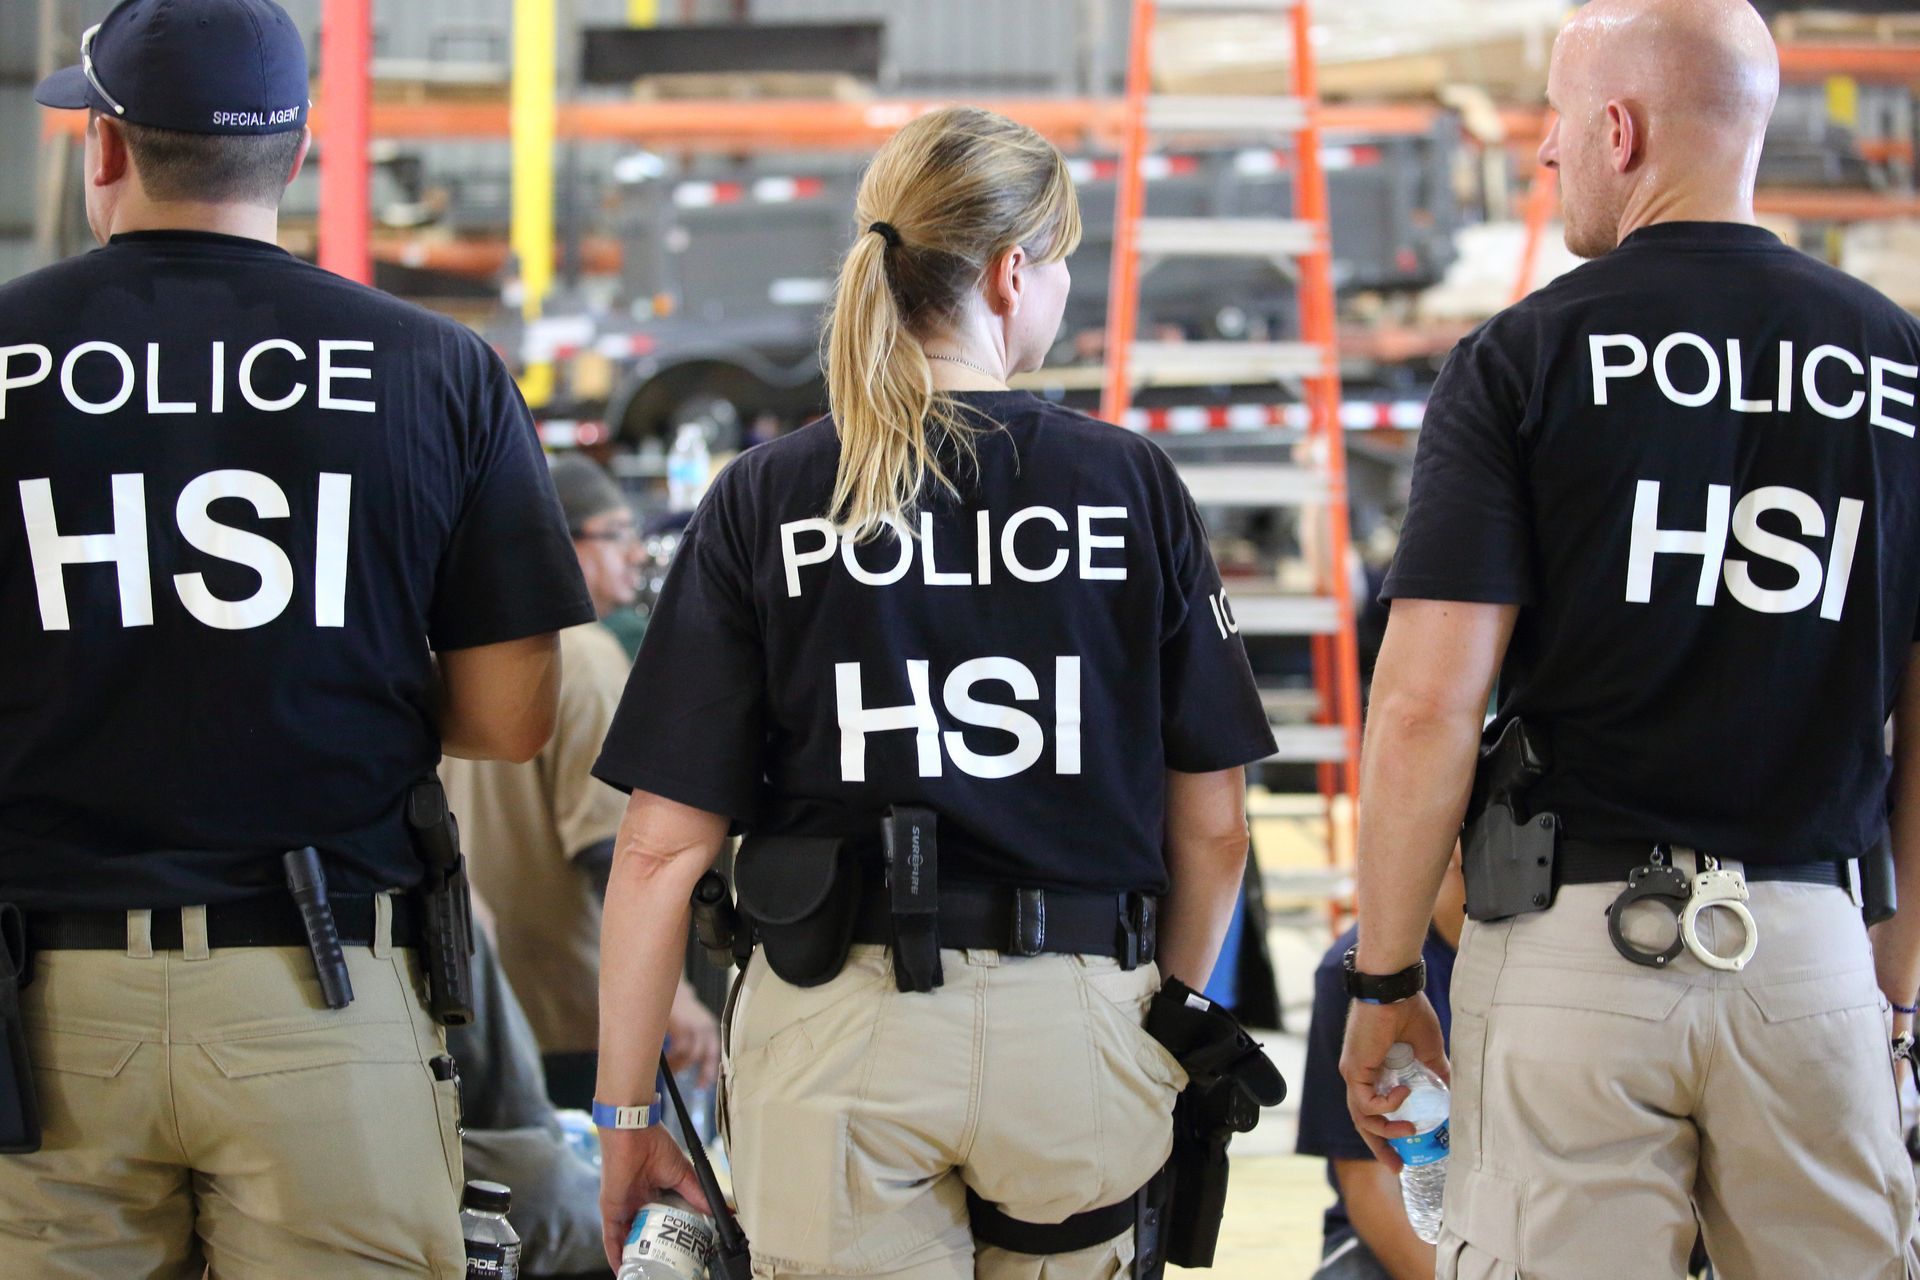 Is e police. Police HSI. Иммиграционная и таможенная полиция США. Security Enforcement Police. Homeland Security HSI.